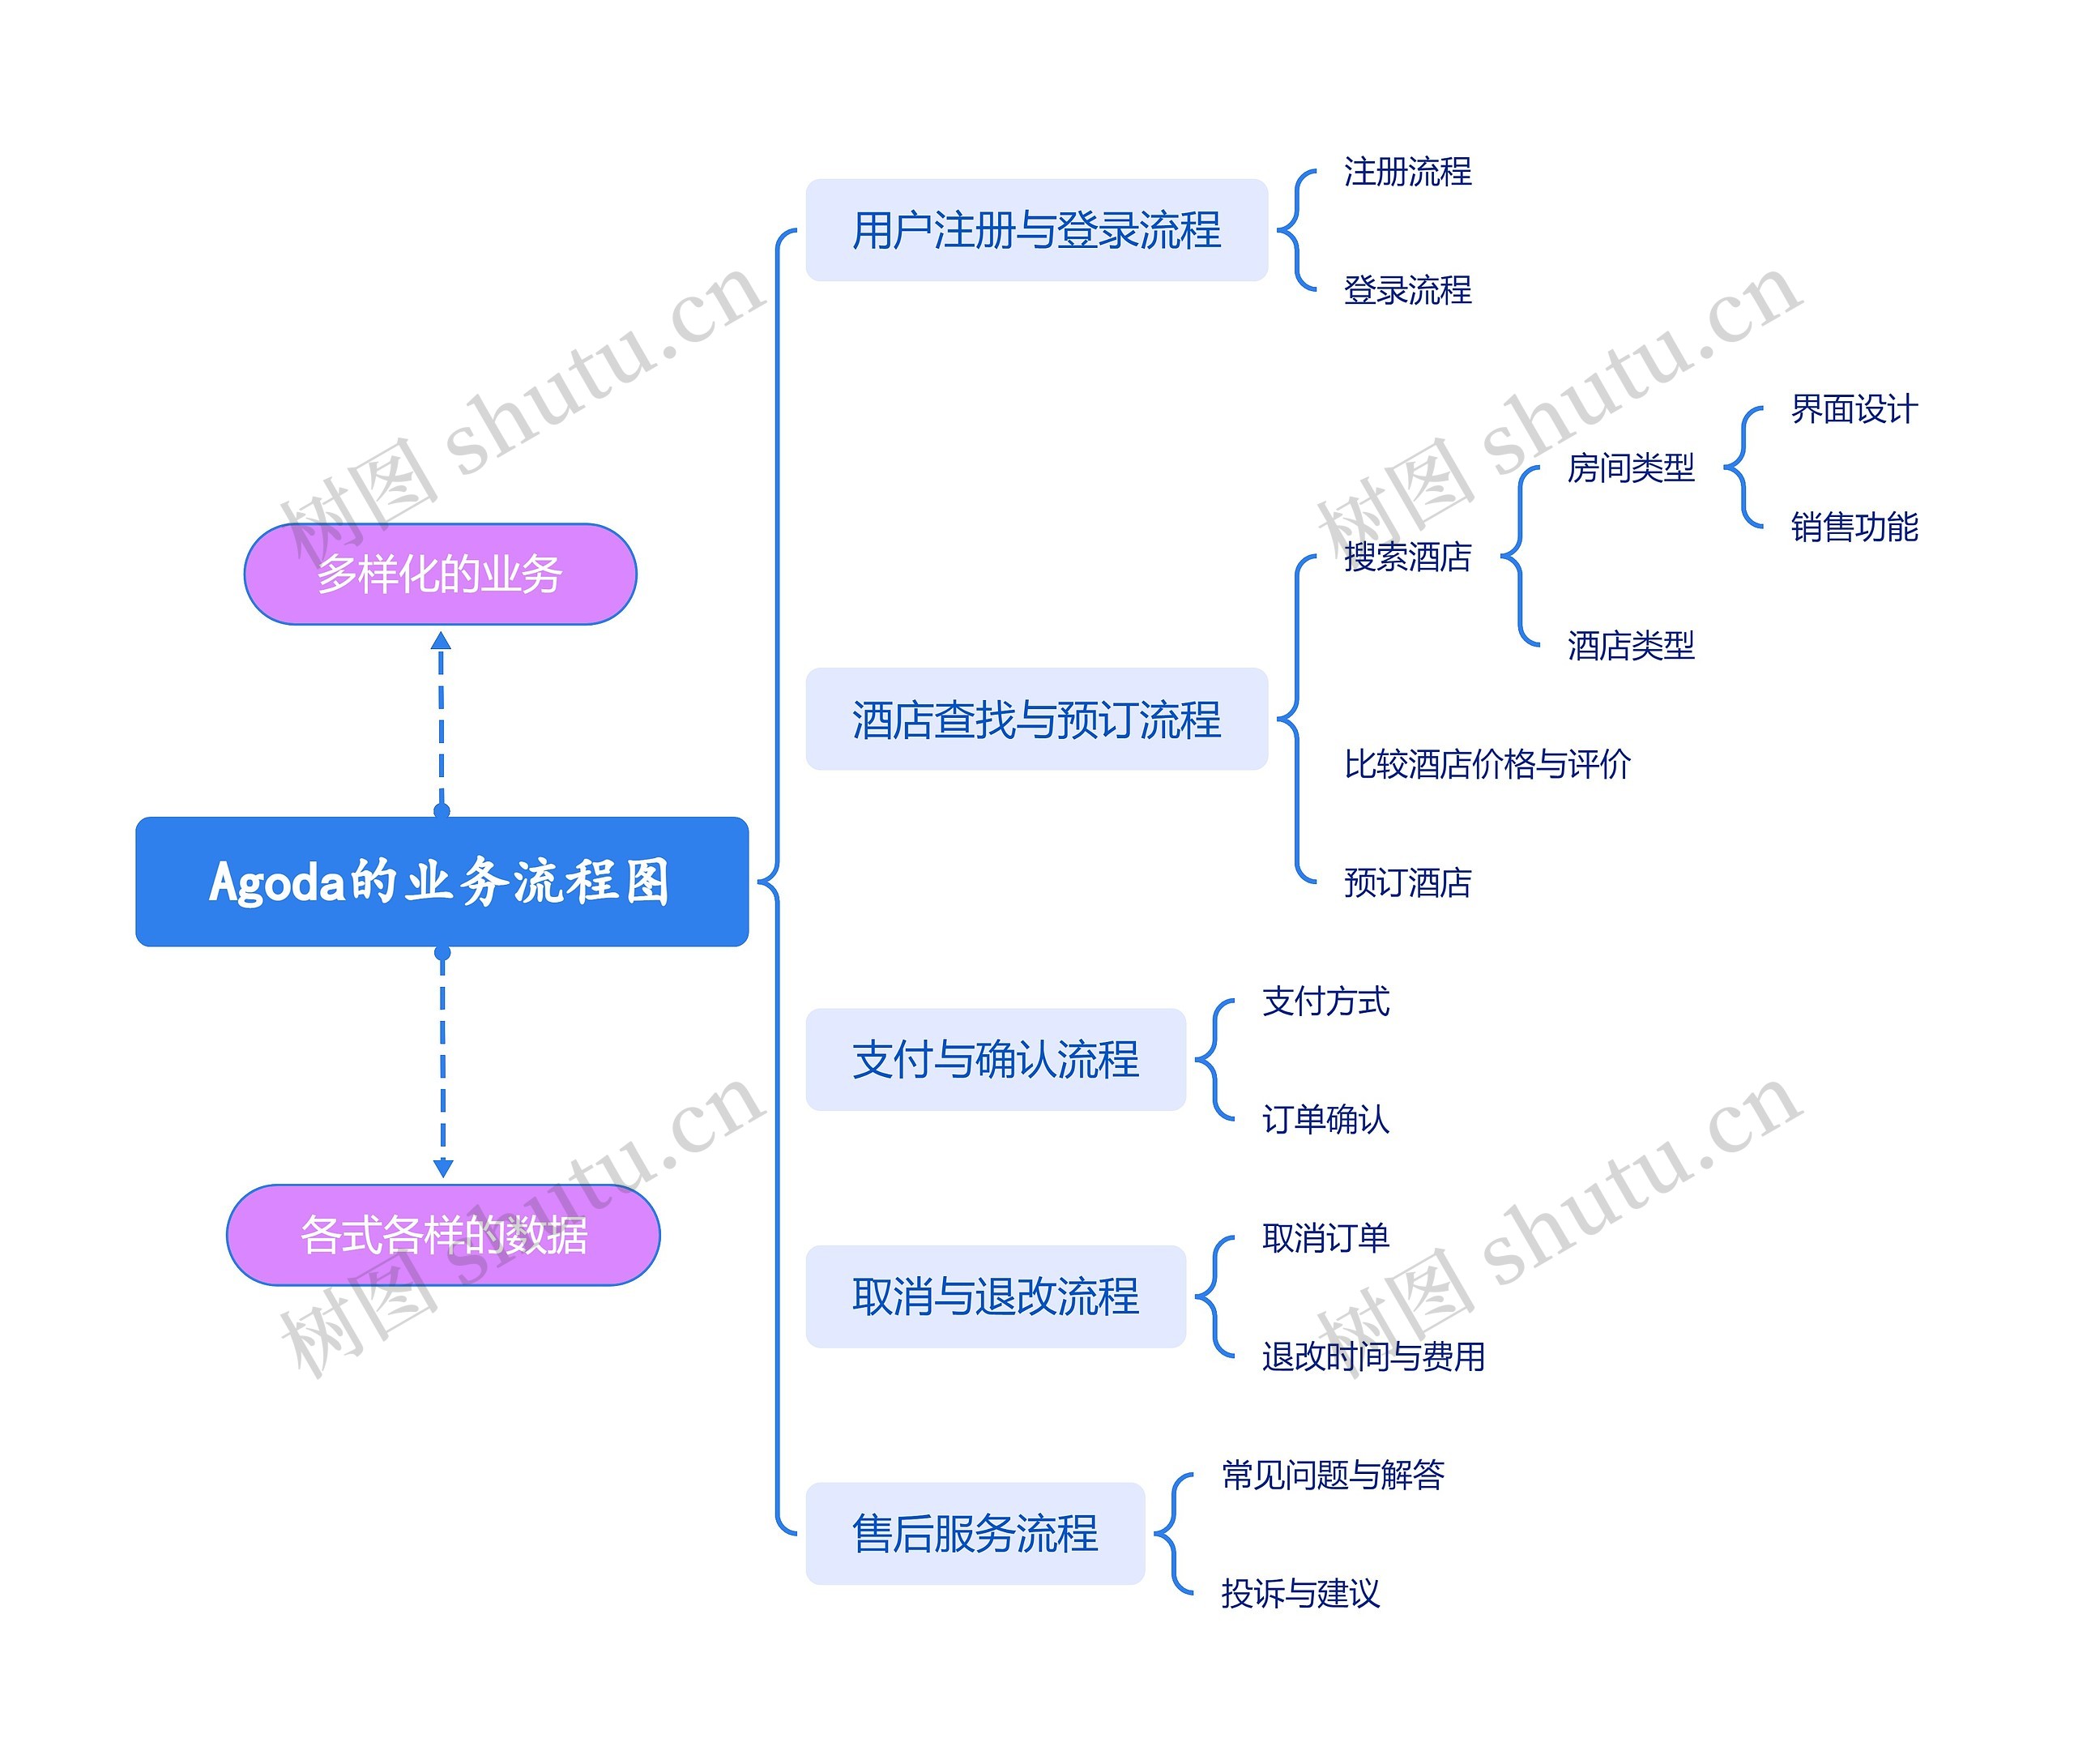 Agoda的业务流程图